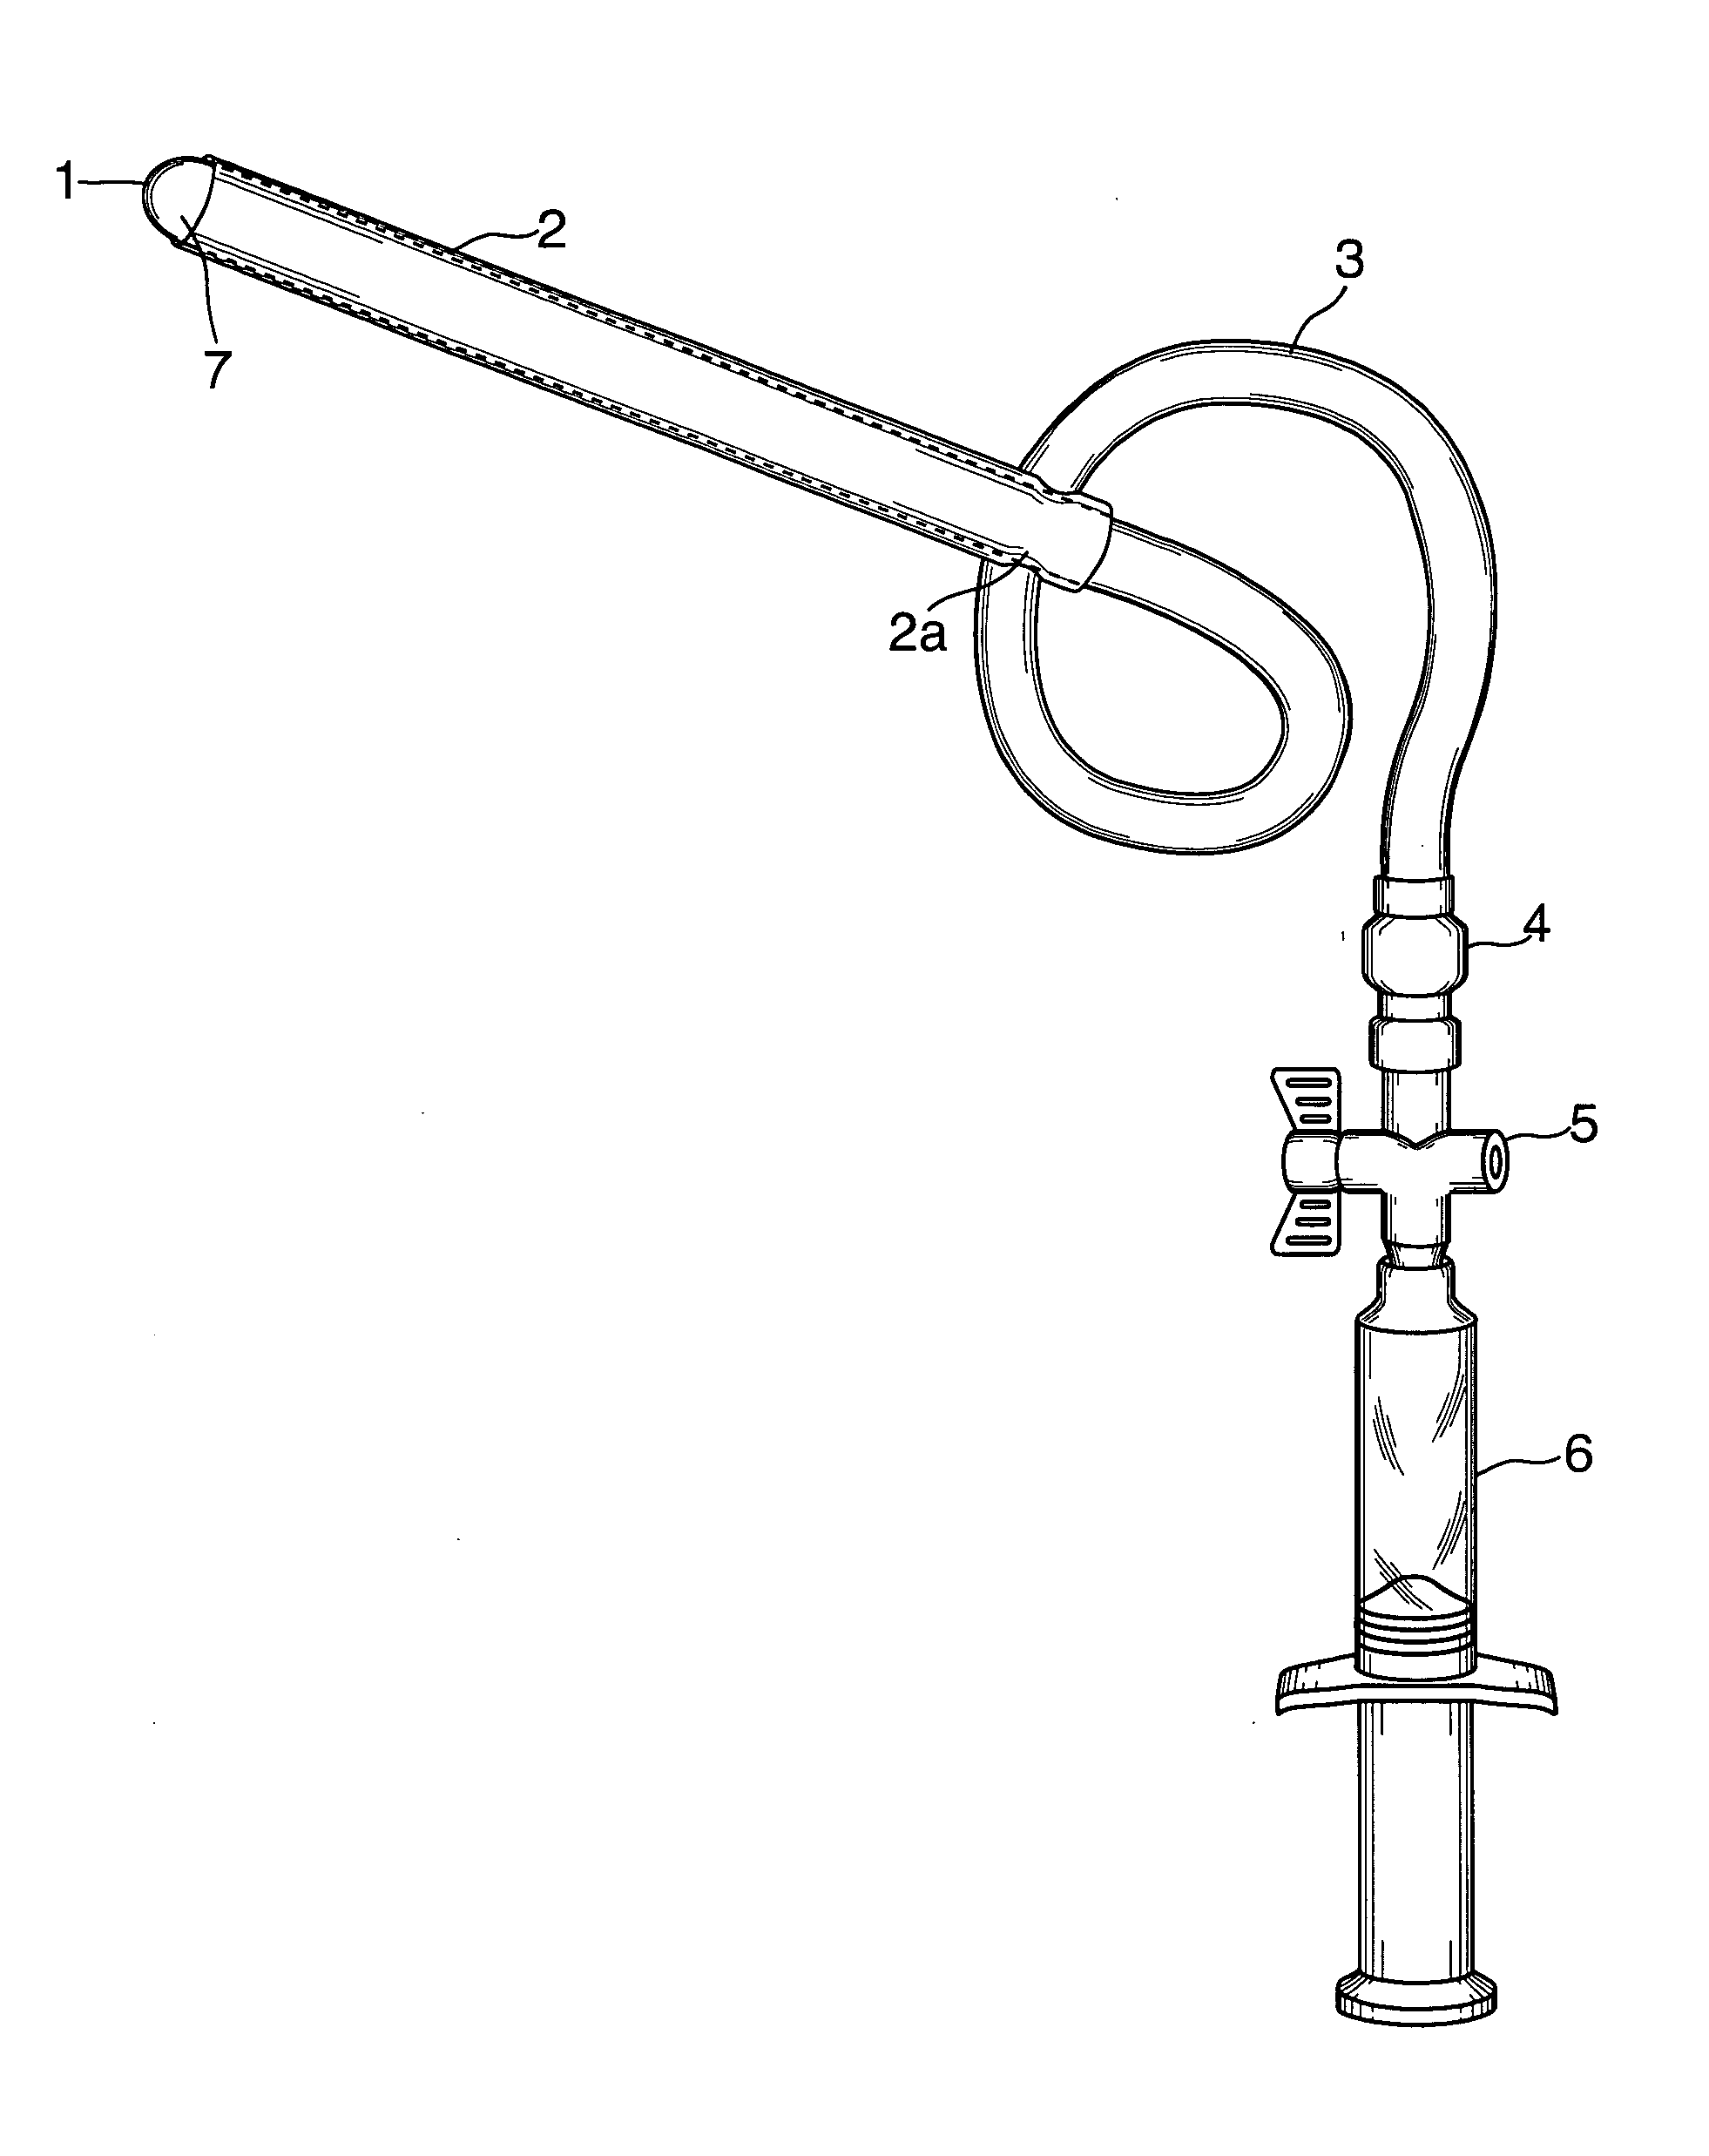 Variable rigidity vaginal dilator and use thereof